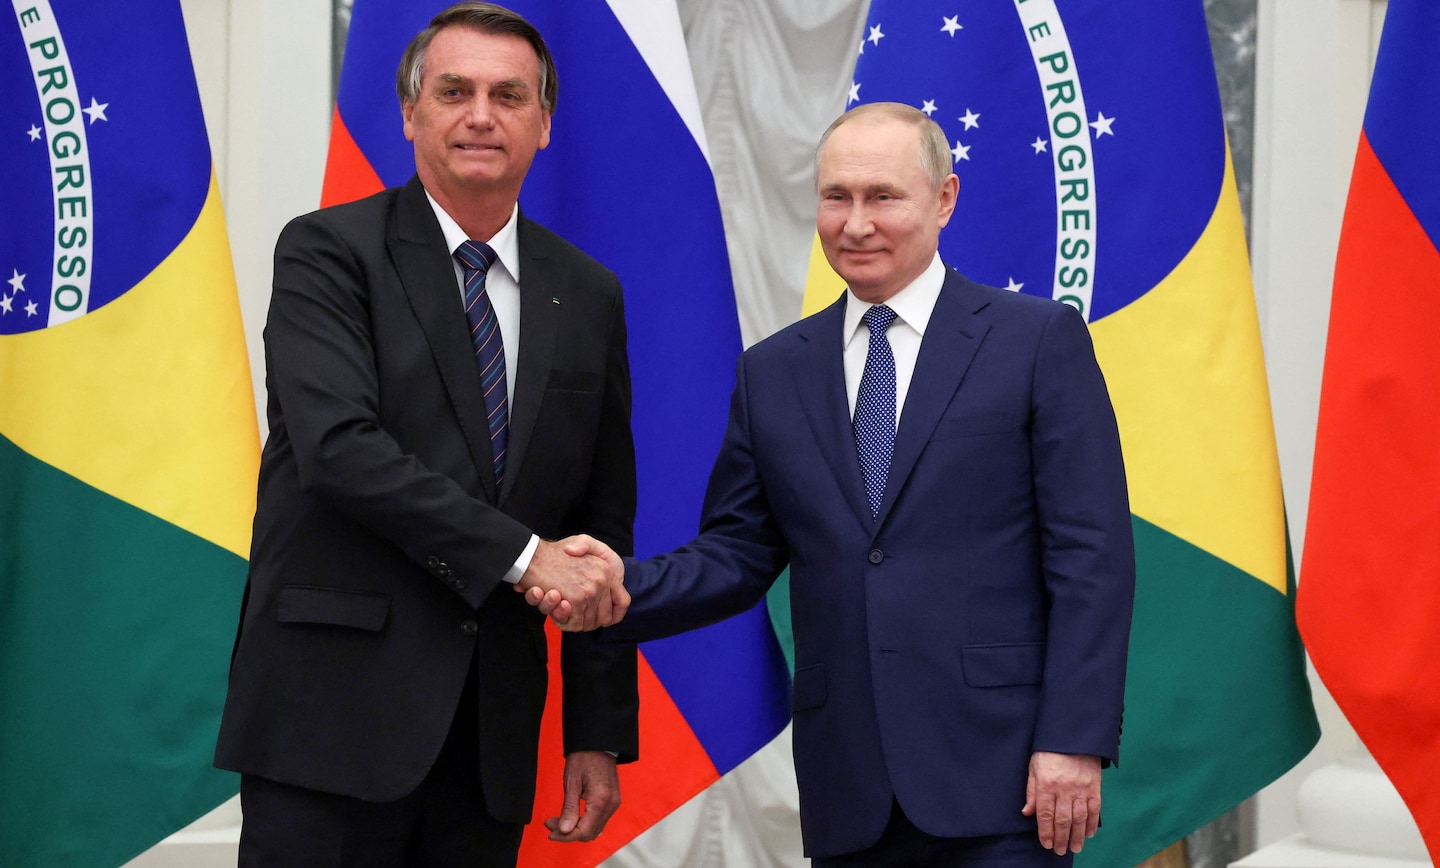 Brazil’s Bolsonaro meets Russia’s Putin in Moscow amid Ukraine crisis